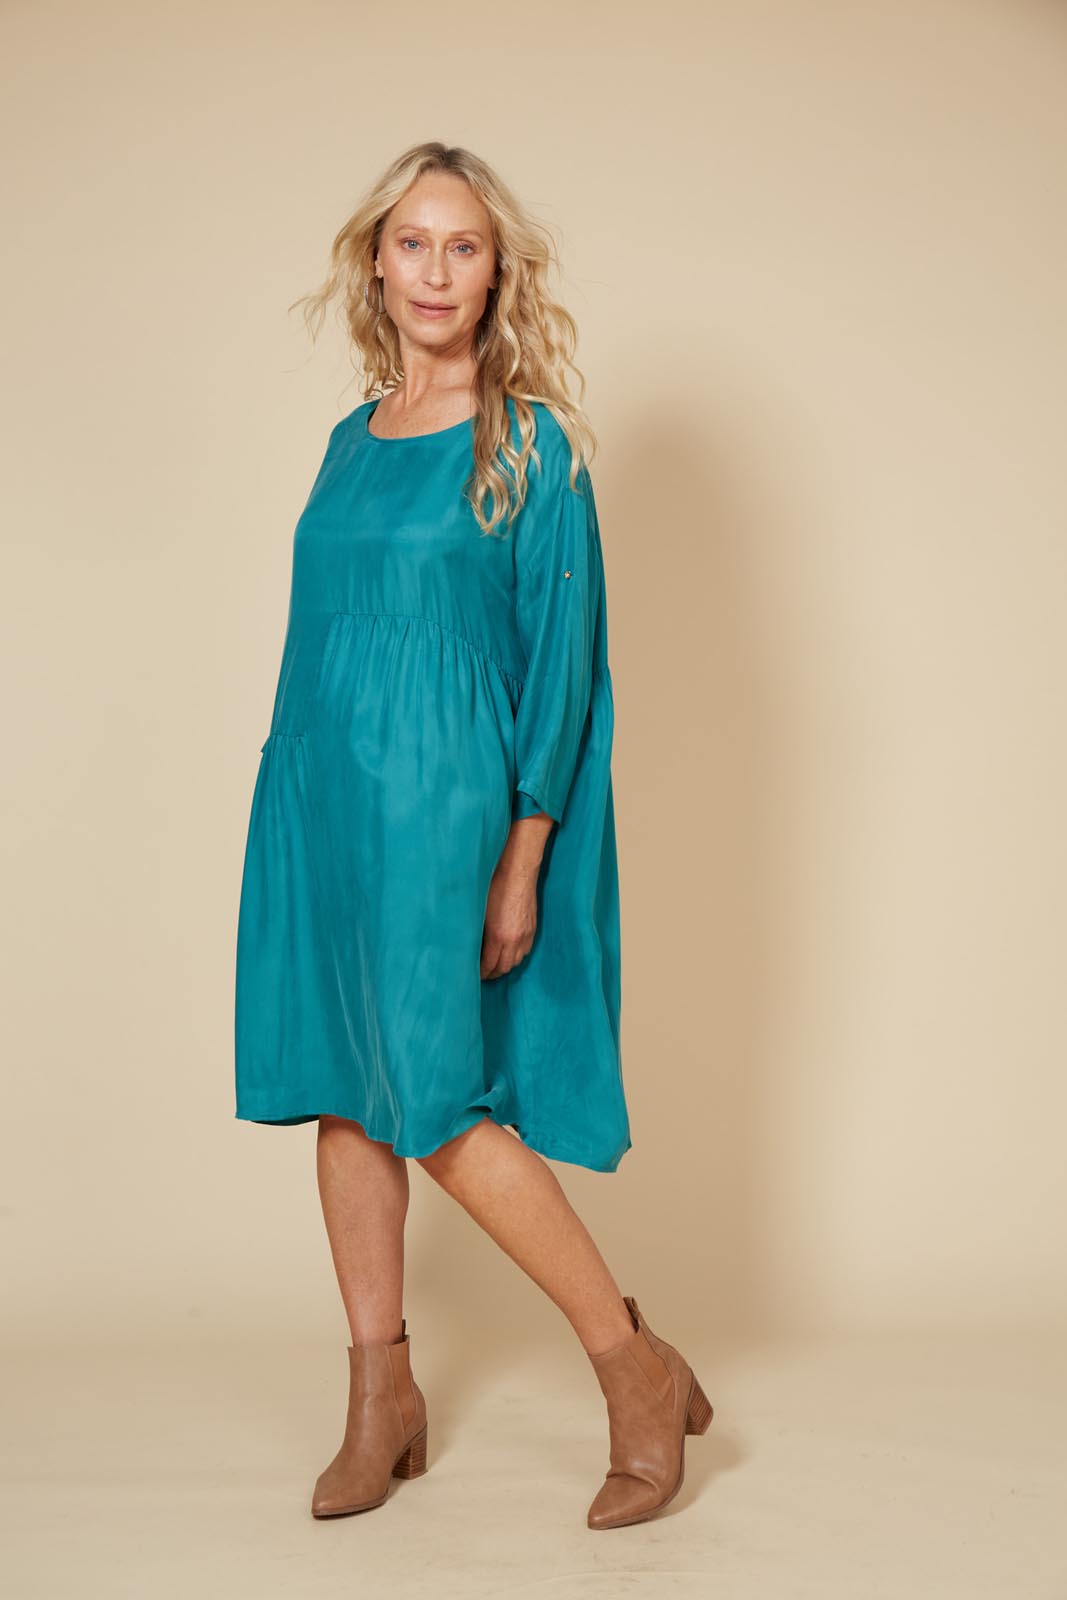 Vienetta Dress - Teal - eb&ive Clothing - Dress 3/4 Length